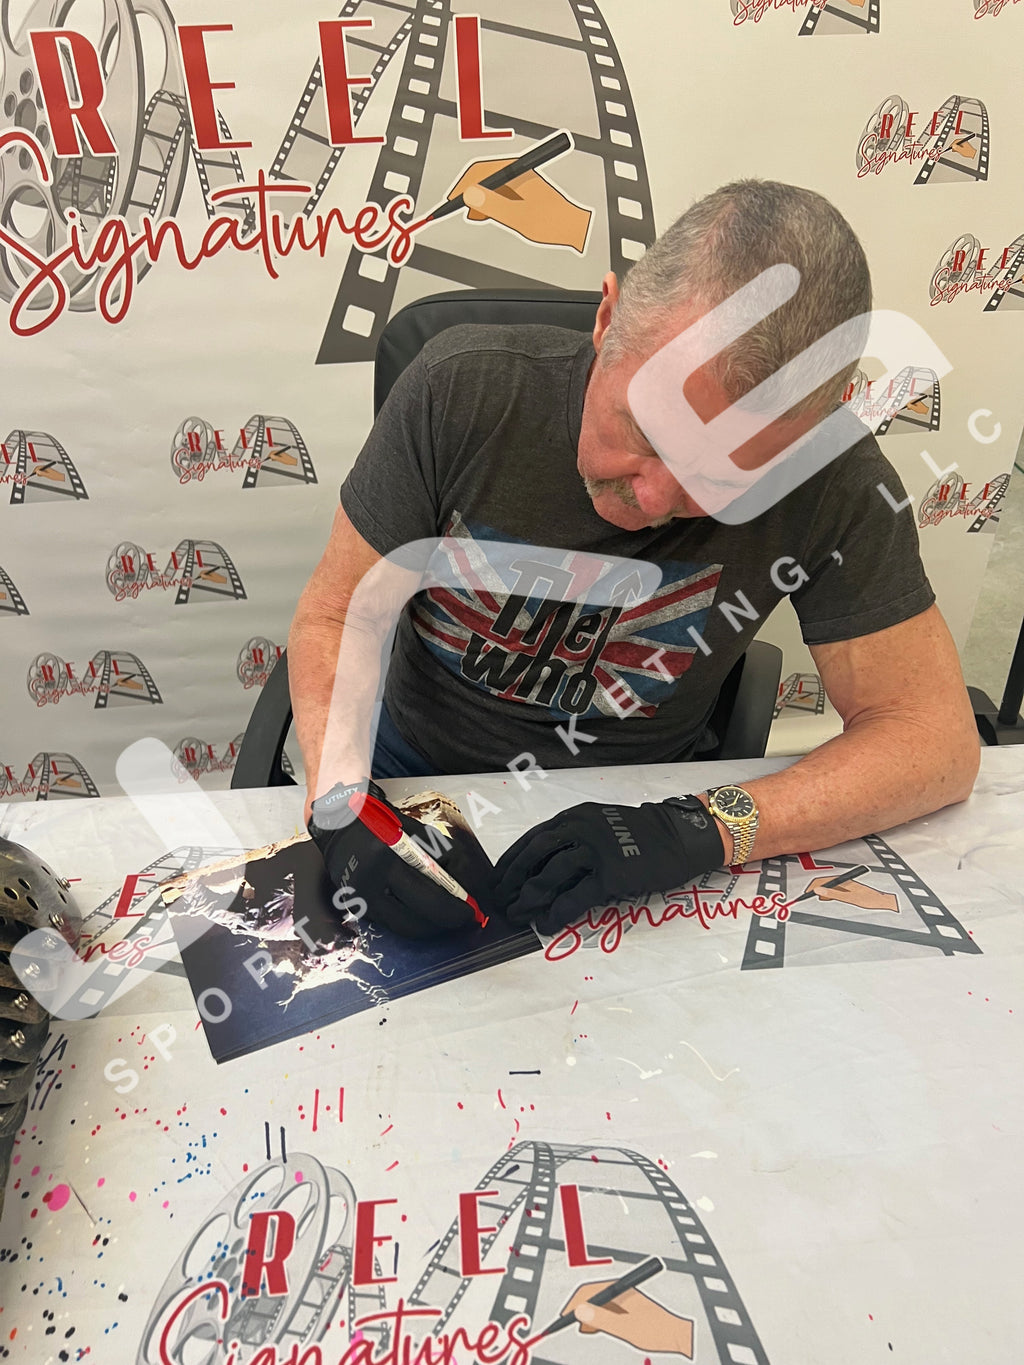 Kane Hodder autographed signed inscribed 8x10 photo Friday the 13th JSA Jason